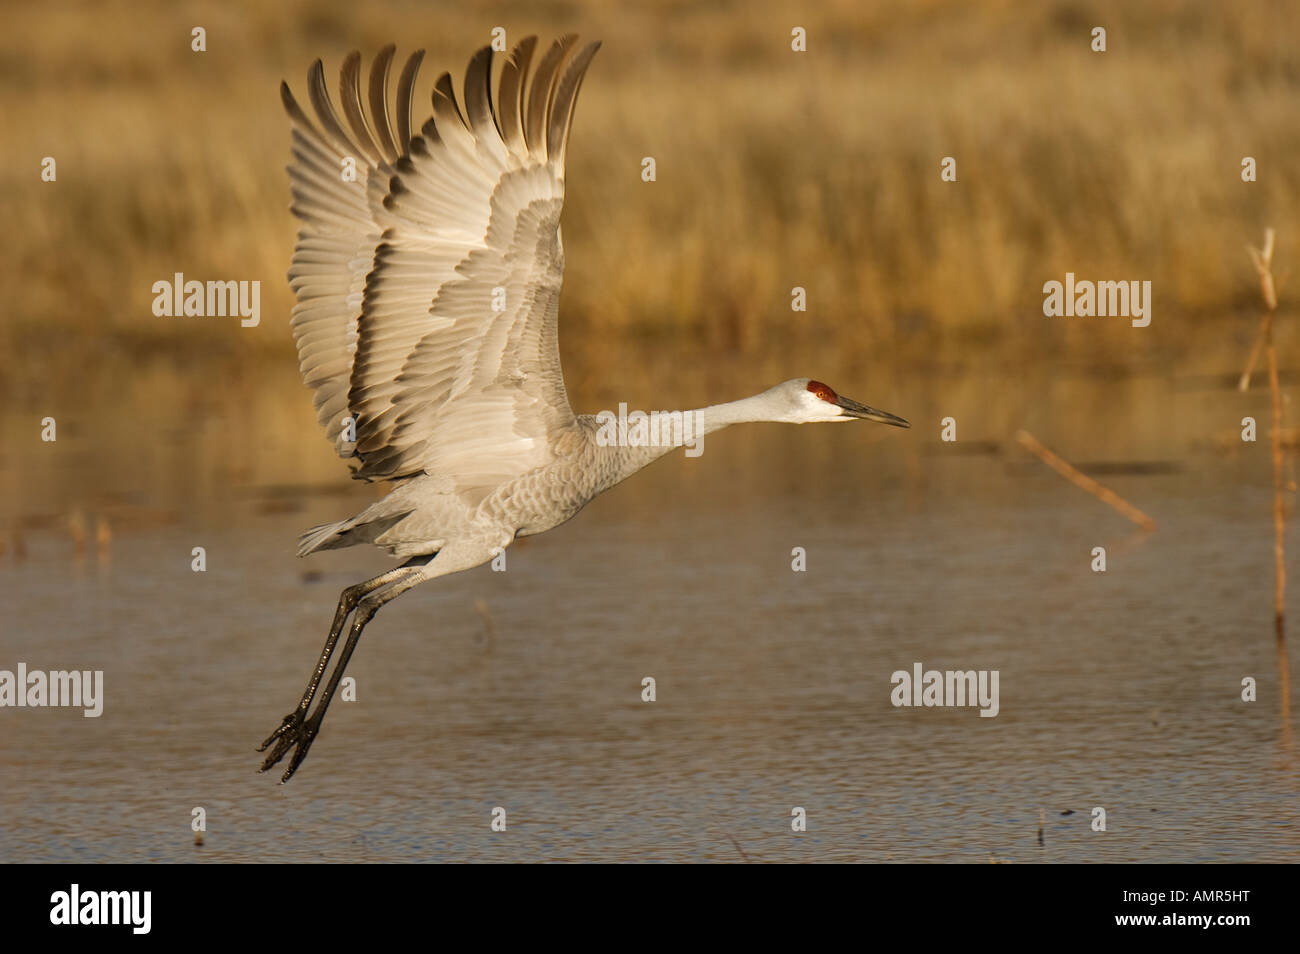 A Sandhill Crane takes off in flight Stock Photo